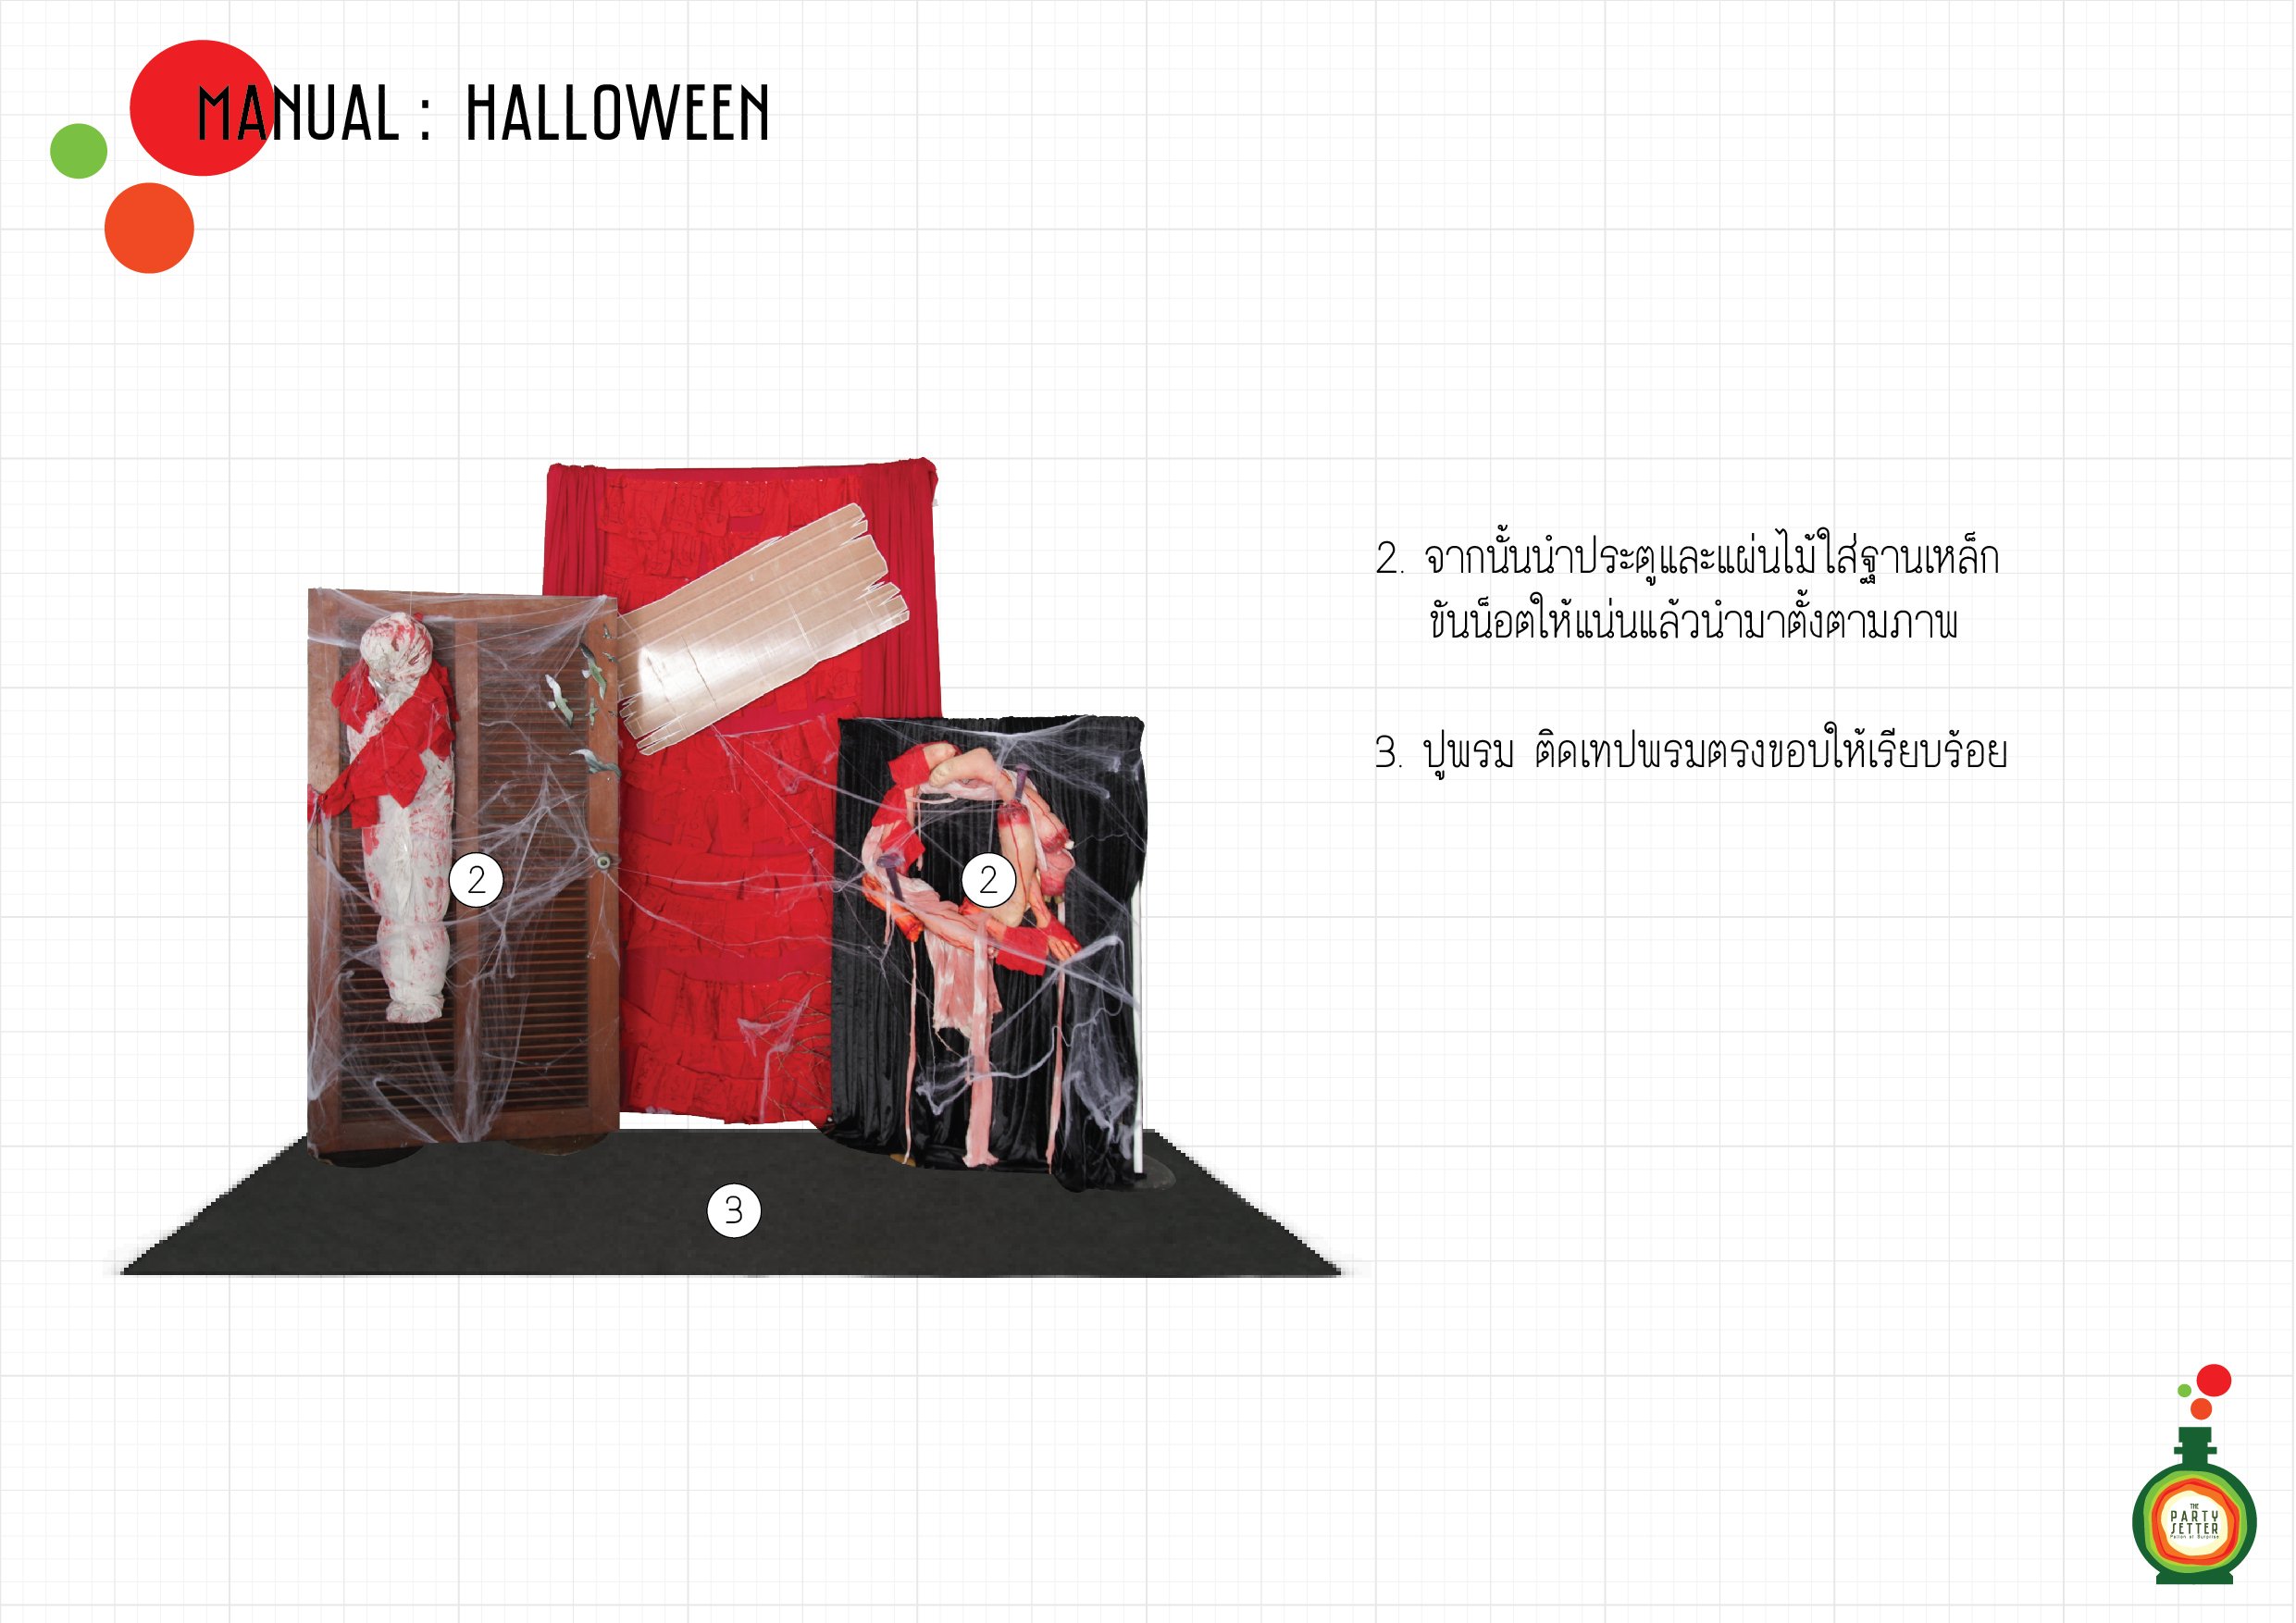 Manual_Halloween_02-02-01.jpg